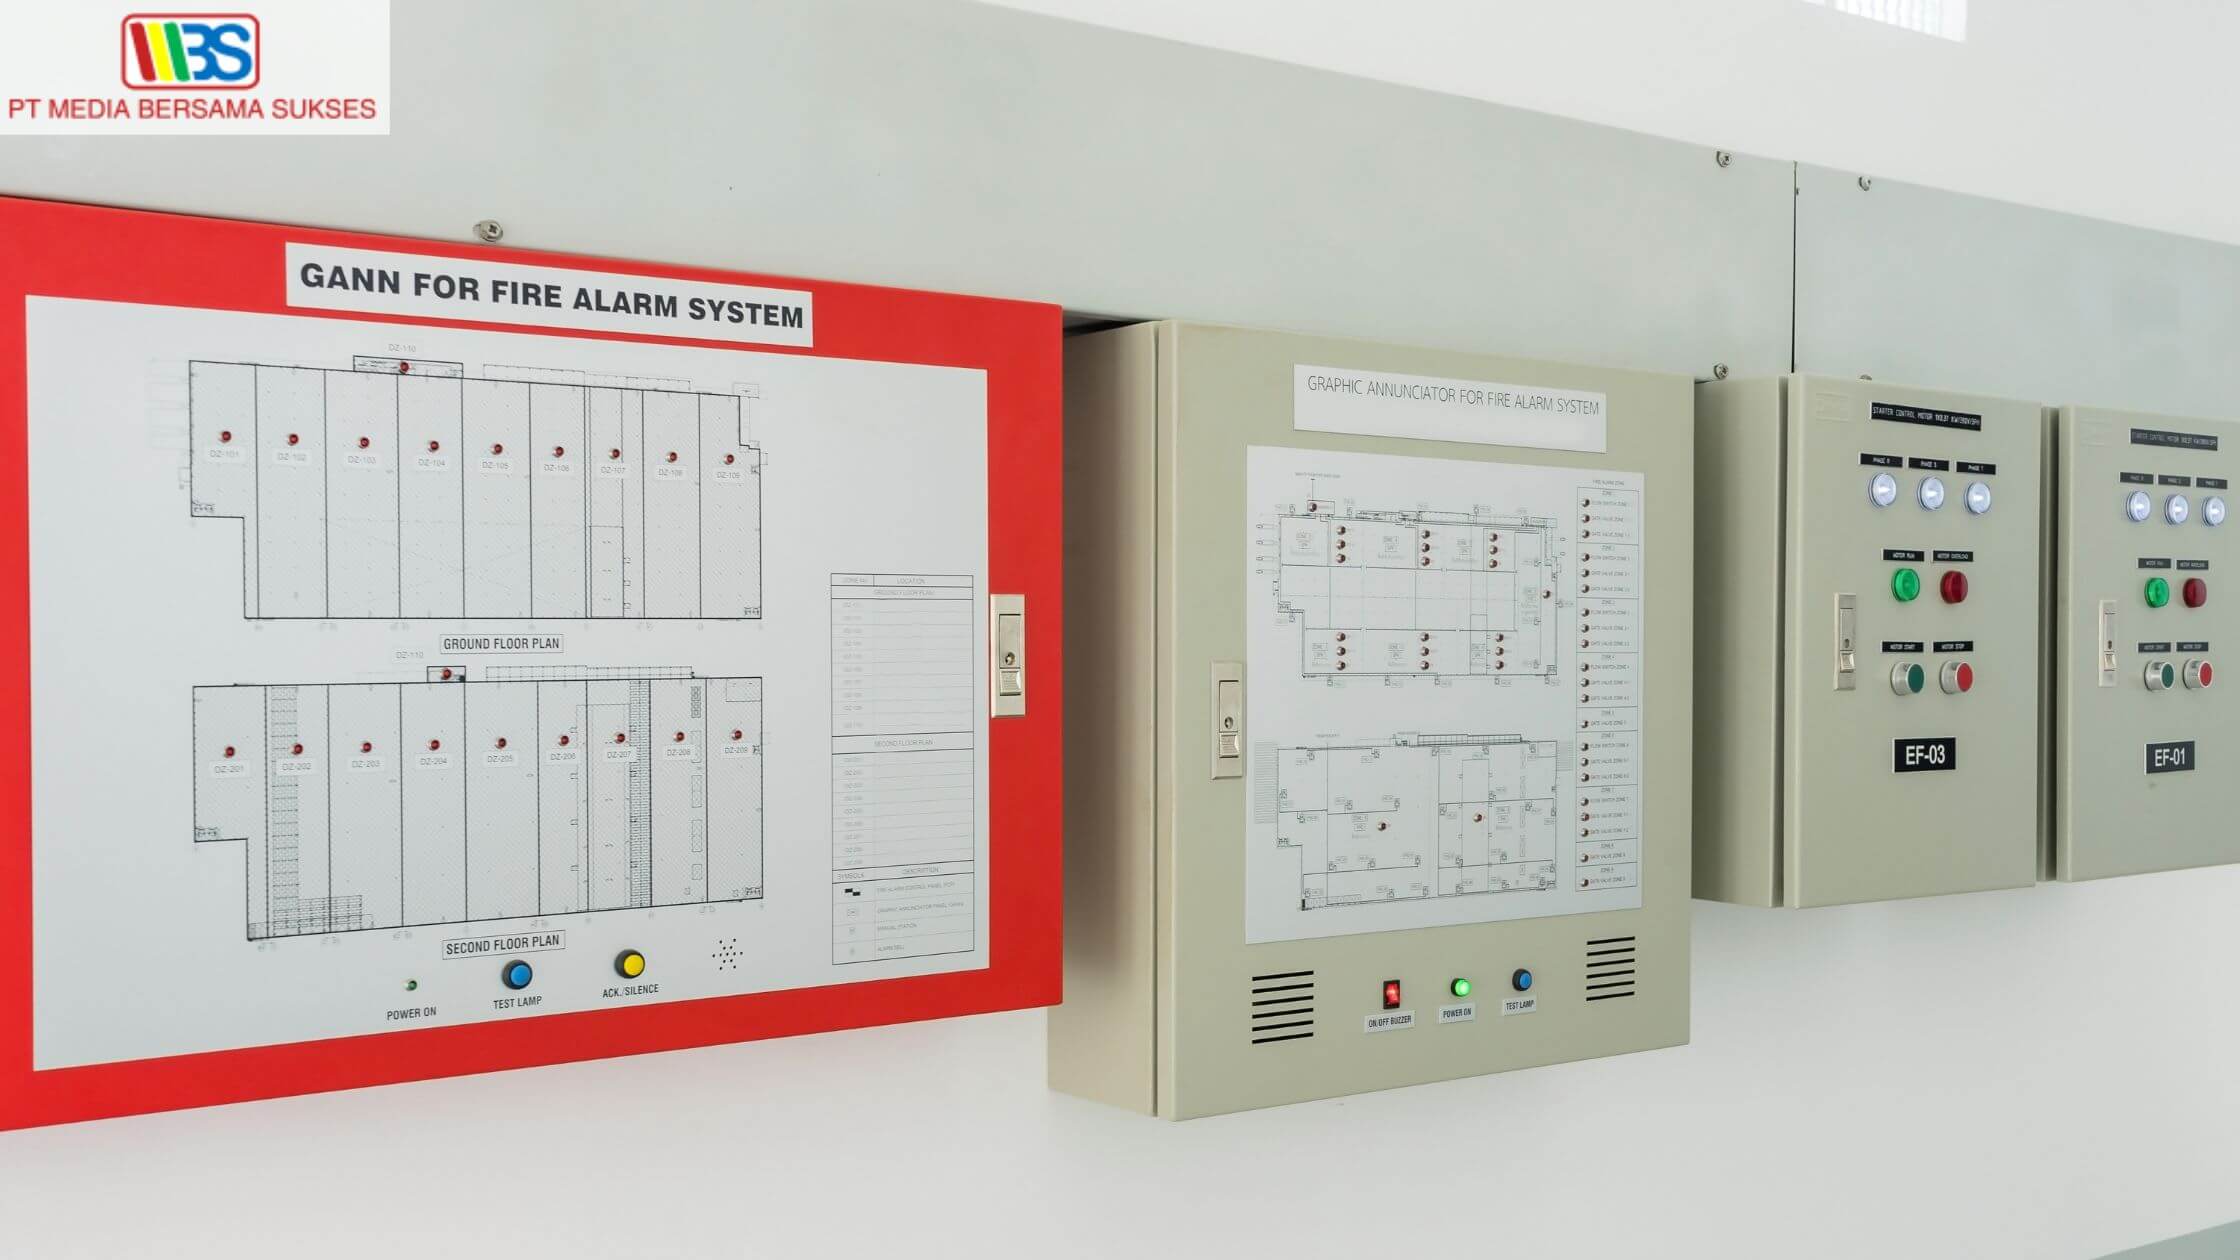 Mengenal Tentang Fire Alarm Control Panel dan Kegunaannya